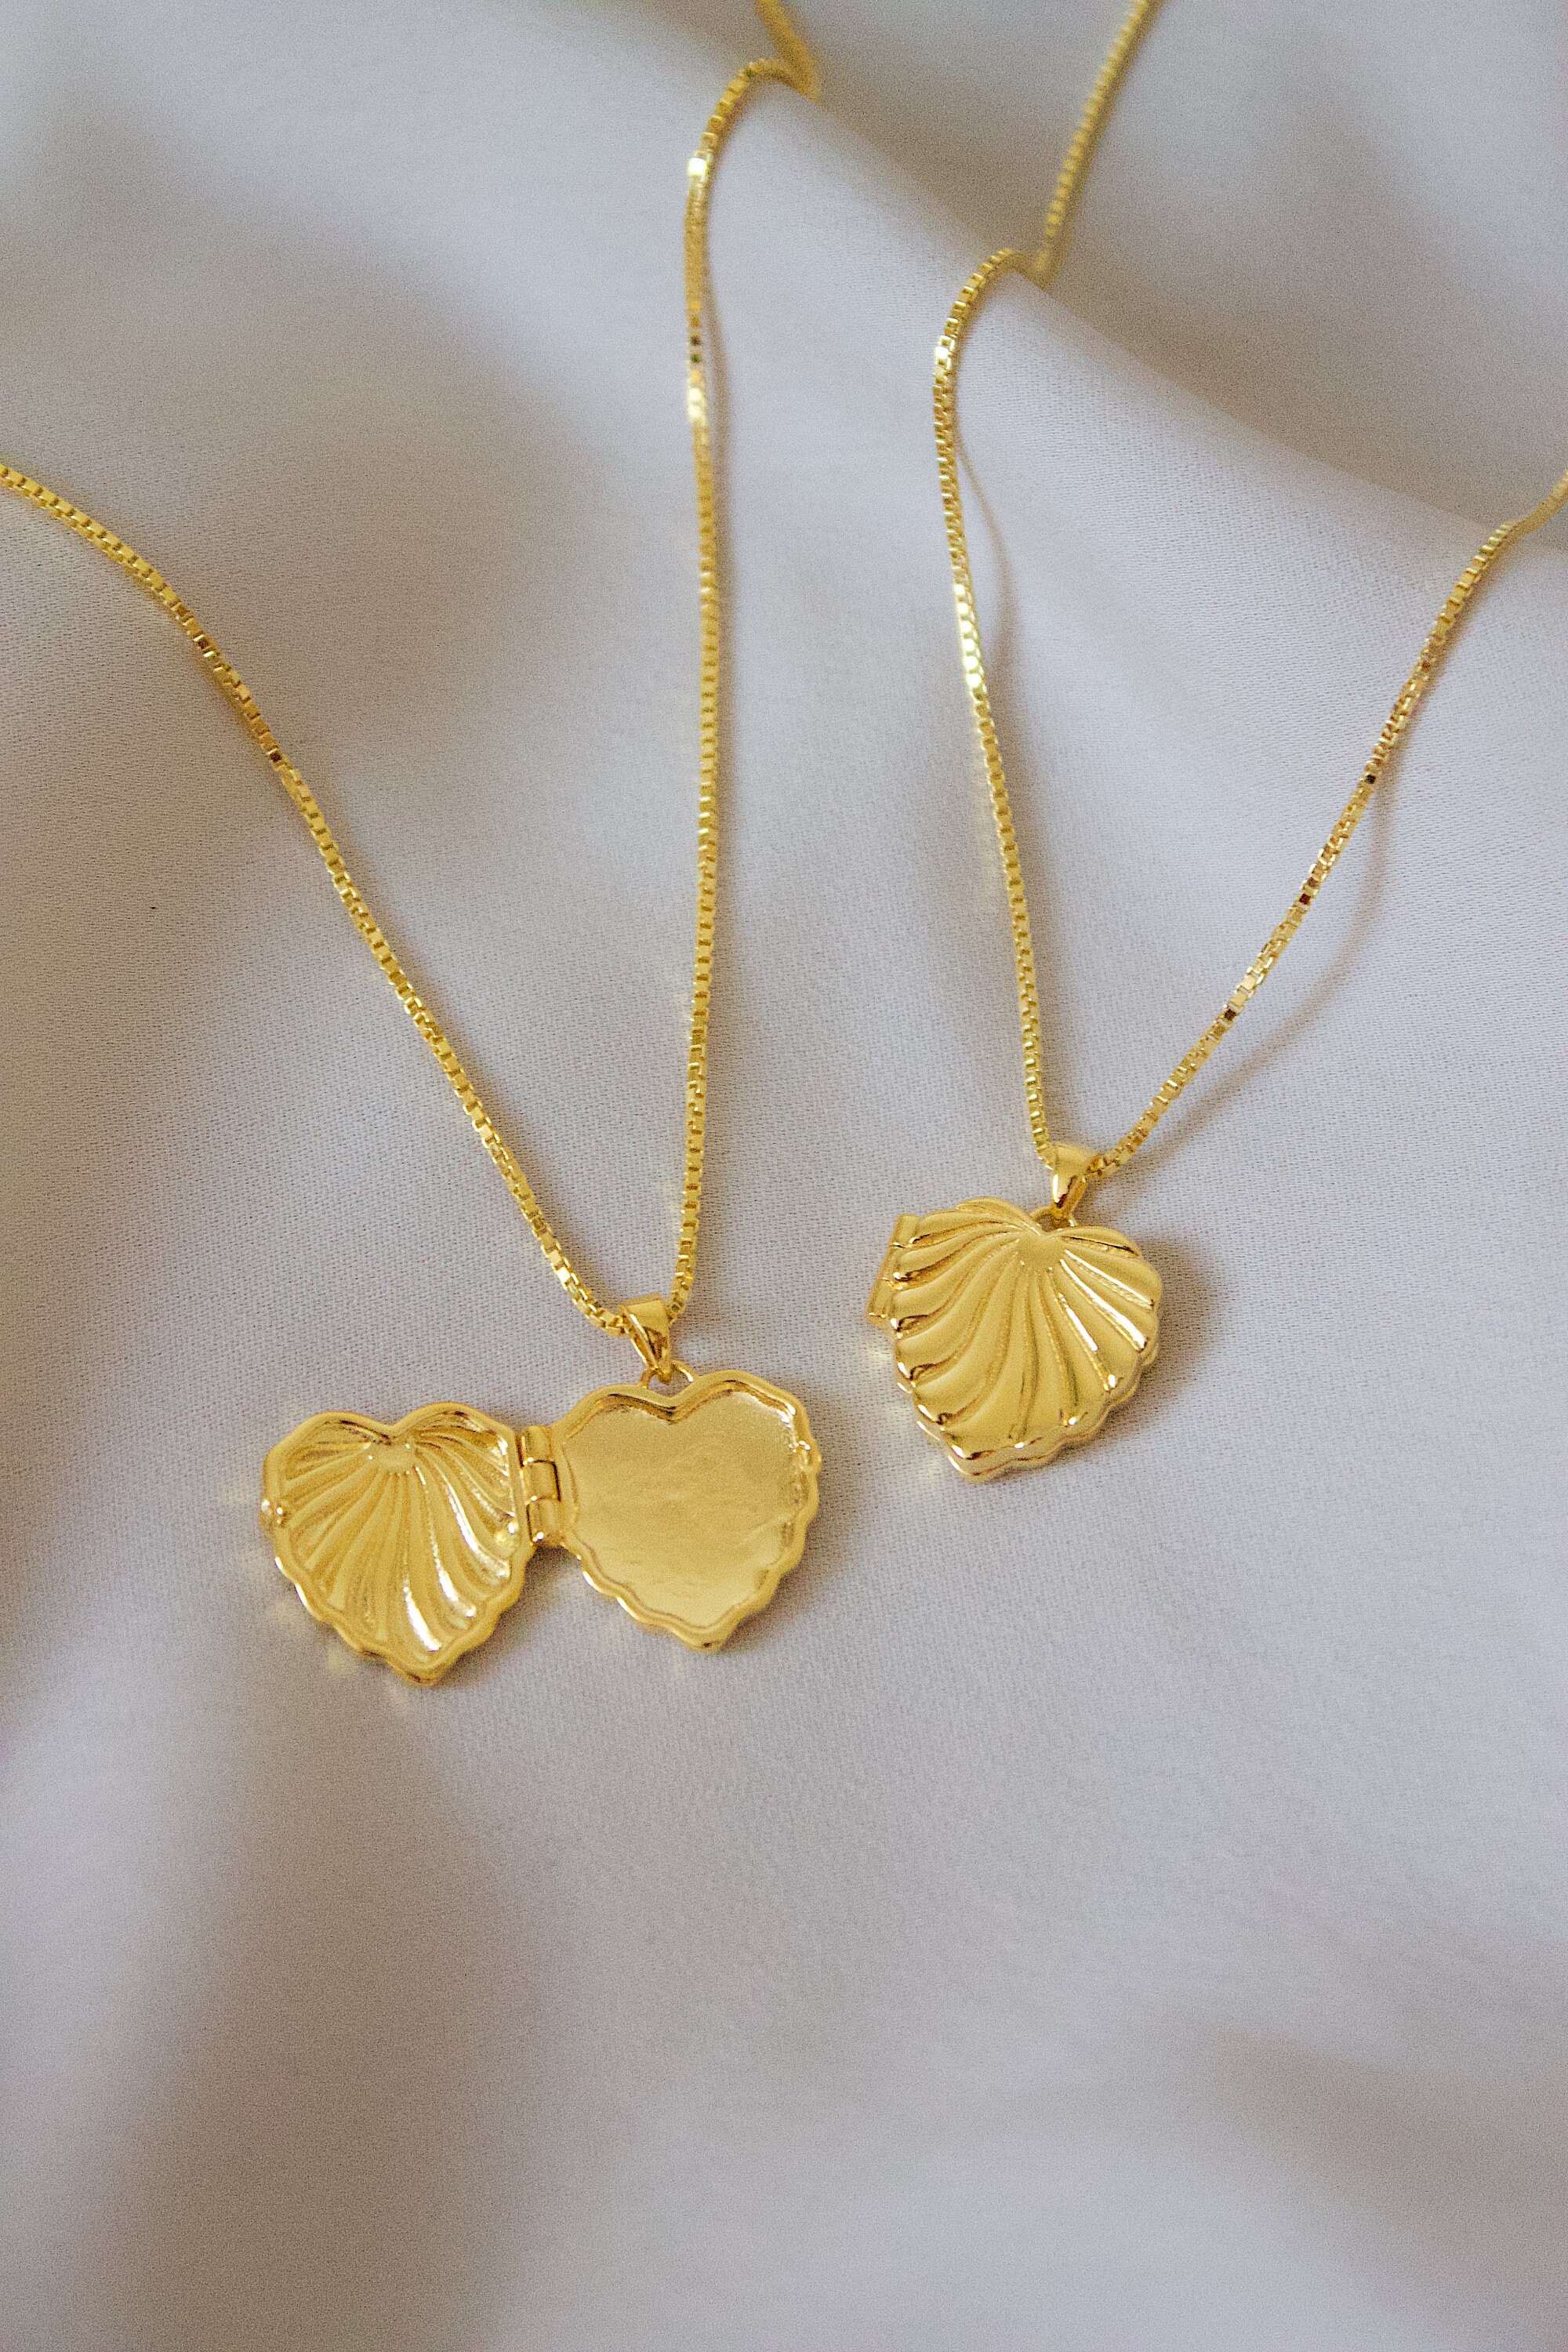 Heart Shell Locket Gold Vermeil 18K Gold Sterling Silver | Etsy